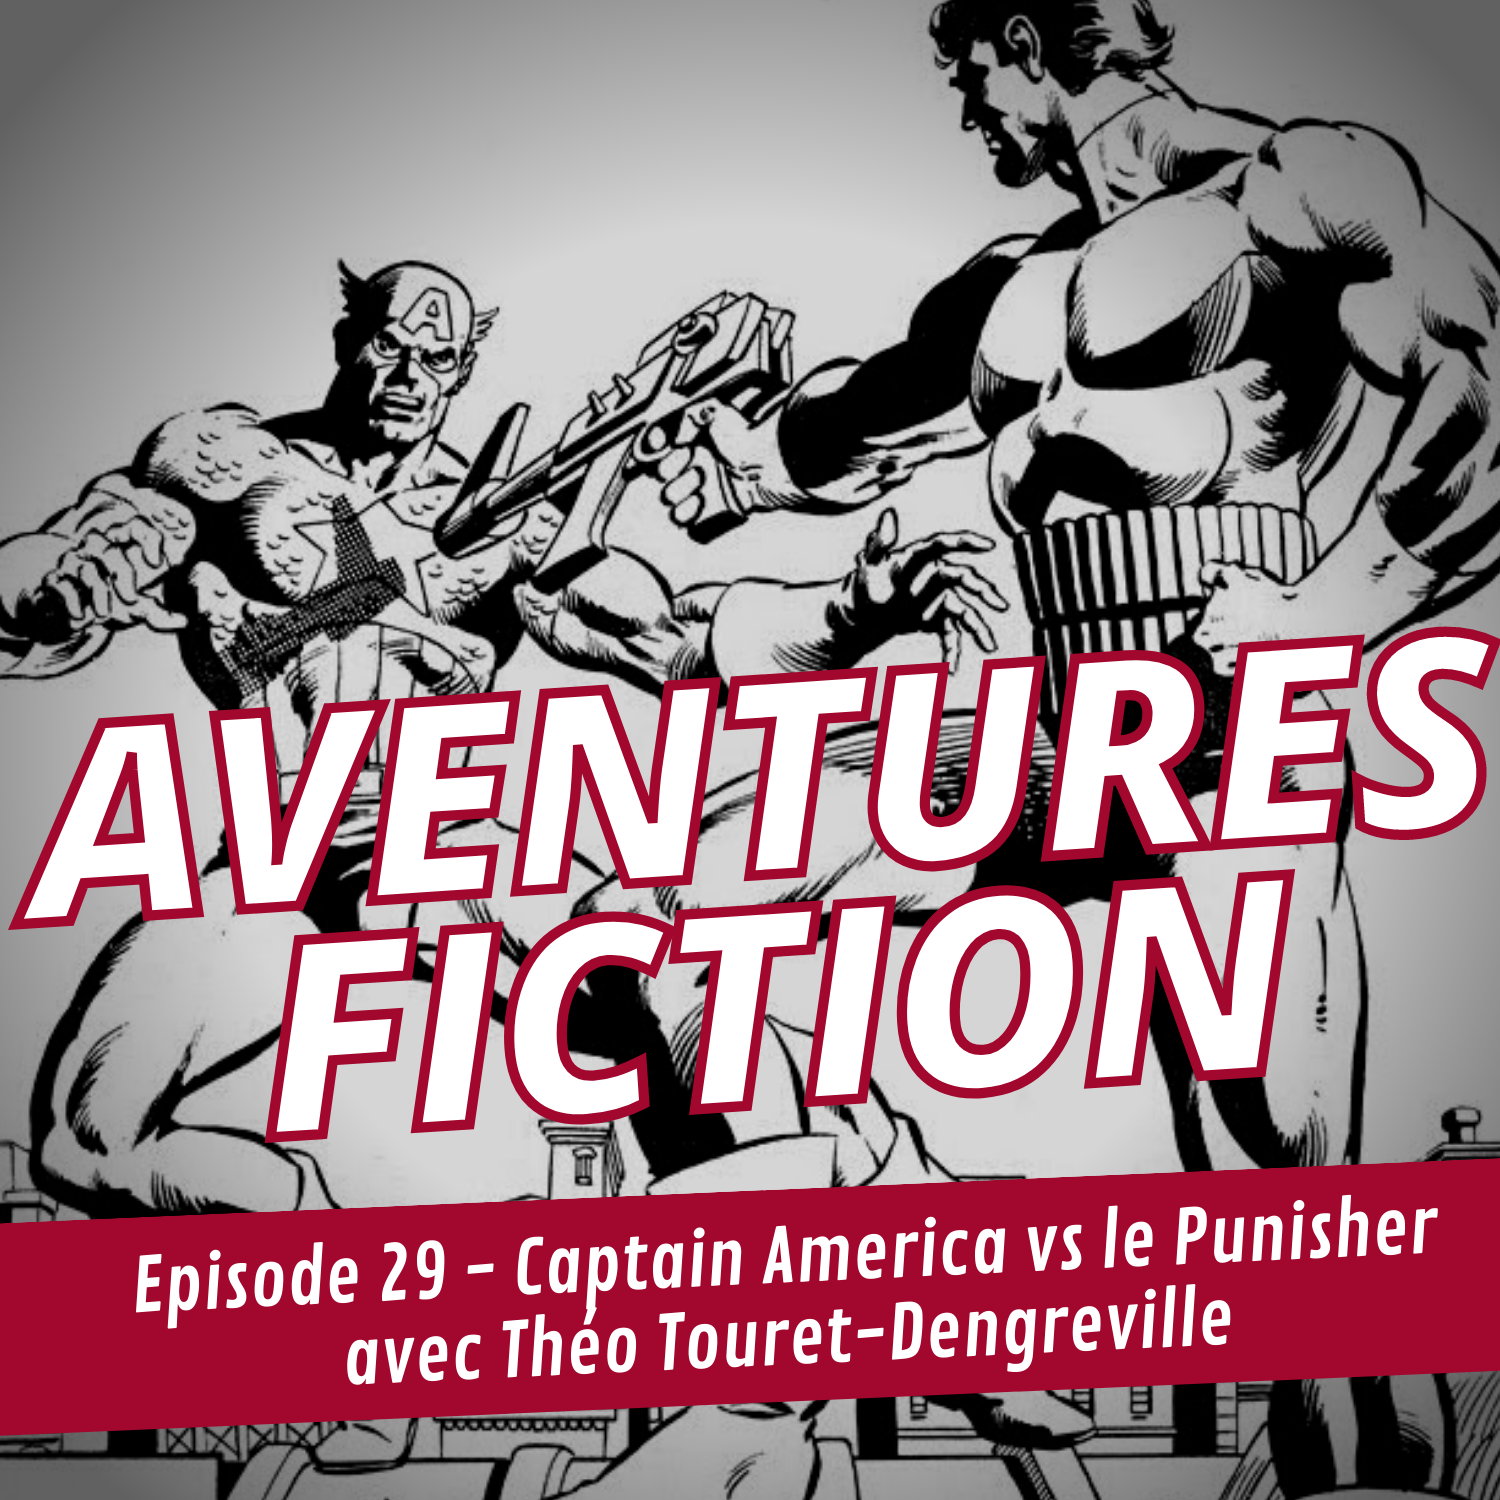 Captain America vs. le Punisher, avec Theo Touret-Dengreville